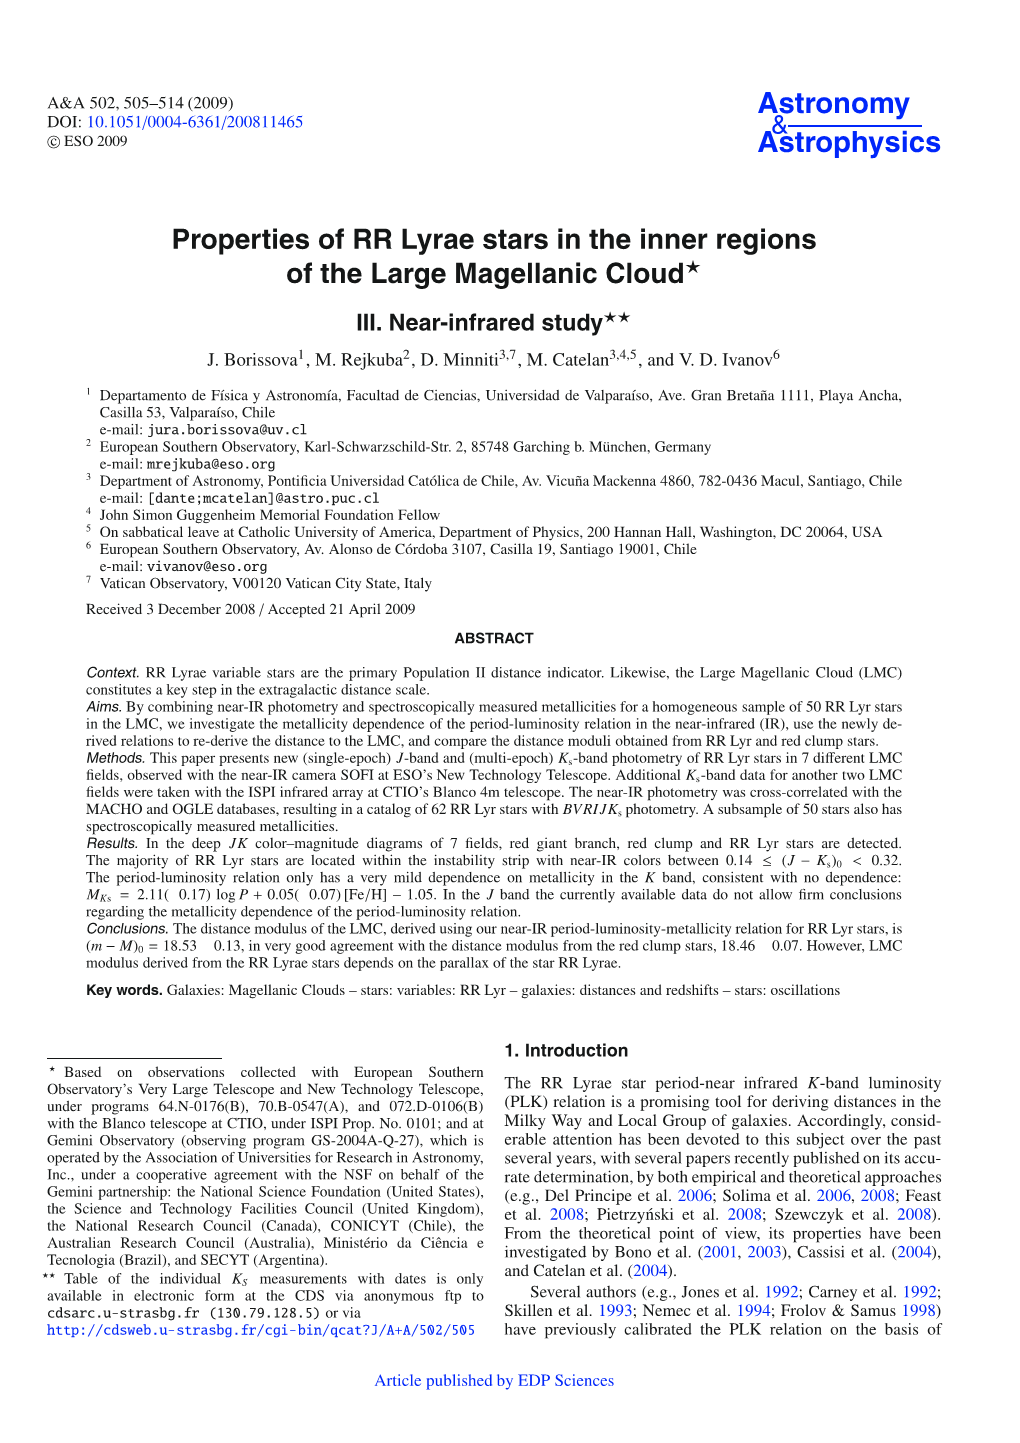 Properties of RR Lyrae Stars in the Inner Regions of the Large Magellanic Cloud III